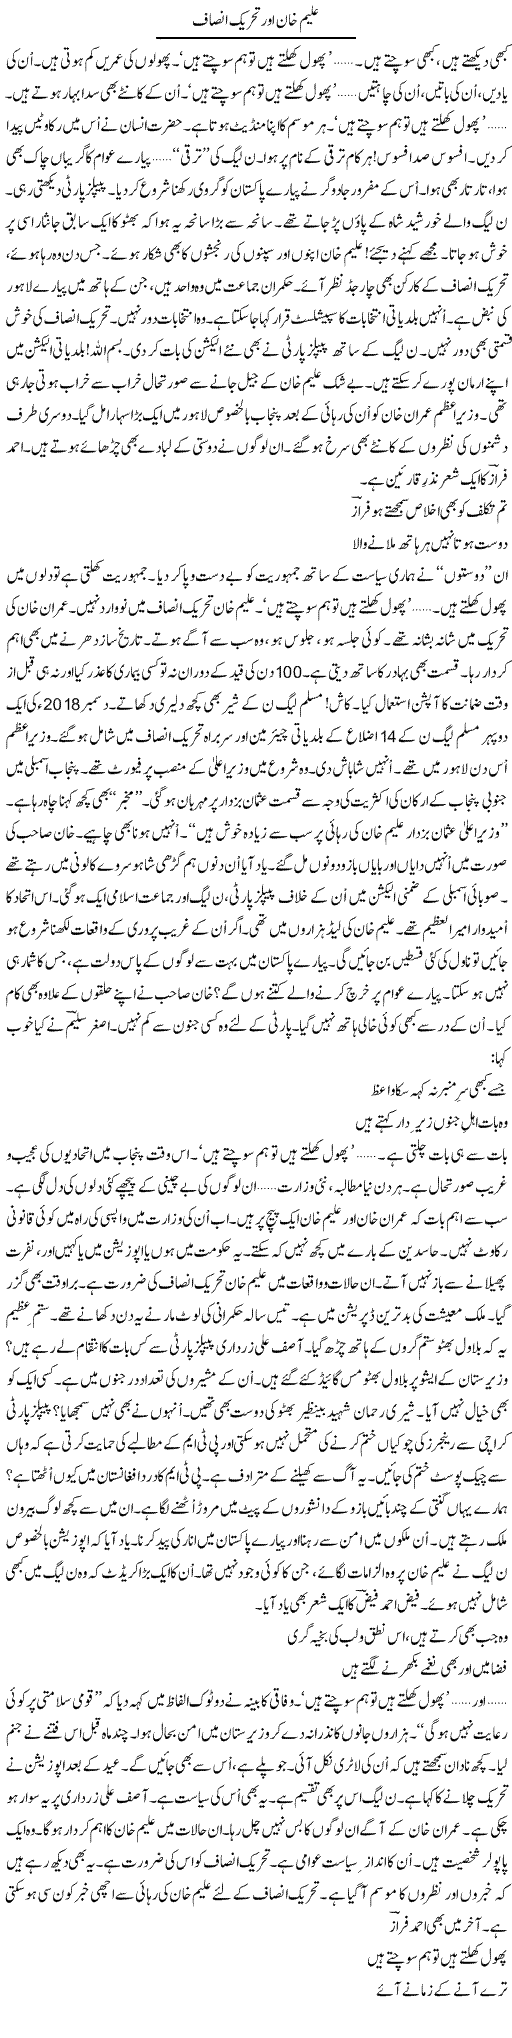 Aleem Khan Aur Tehreek Insaf | Ejaz Hafeez Khan | Daily Urdu Columns